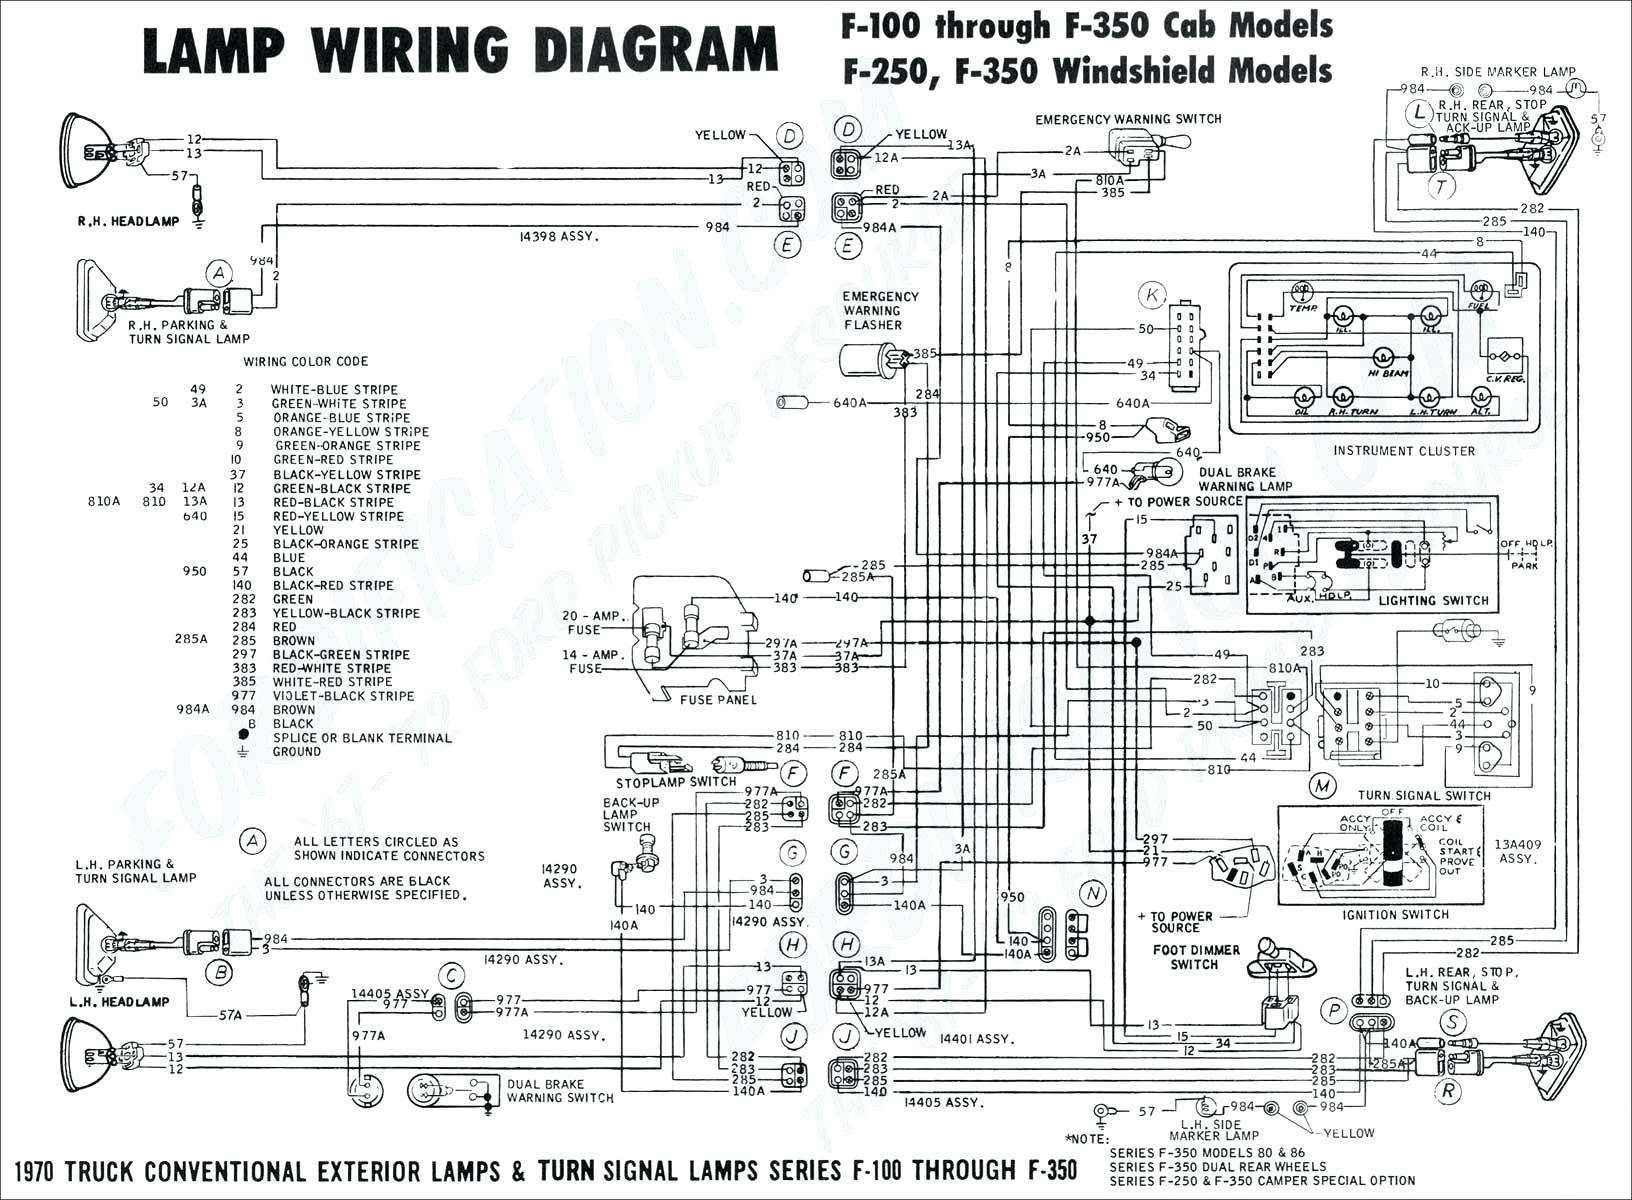 2007 Jeep Wrangler Parts Diagram Jeep Tj Ac Diagram Wiring Diagram Paper Of 2007 Jeep Wrangler Parts Diagram